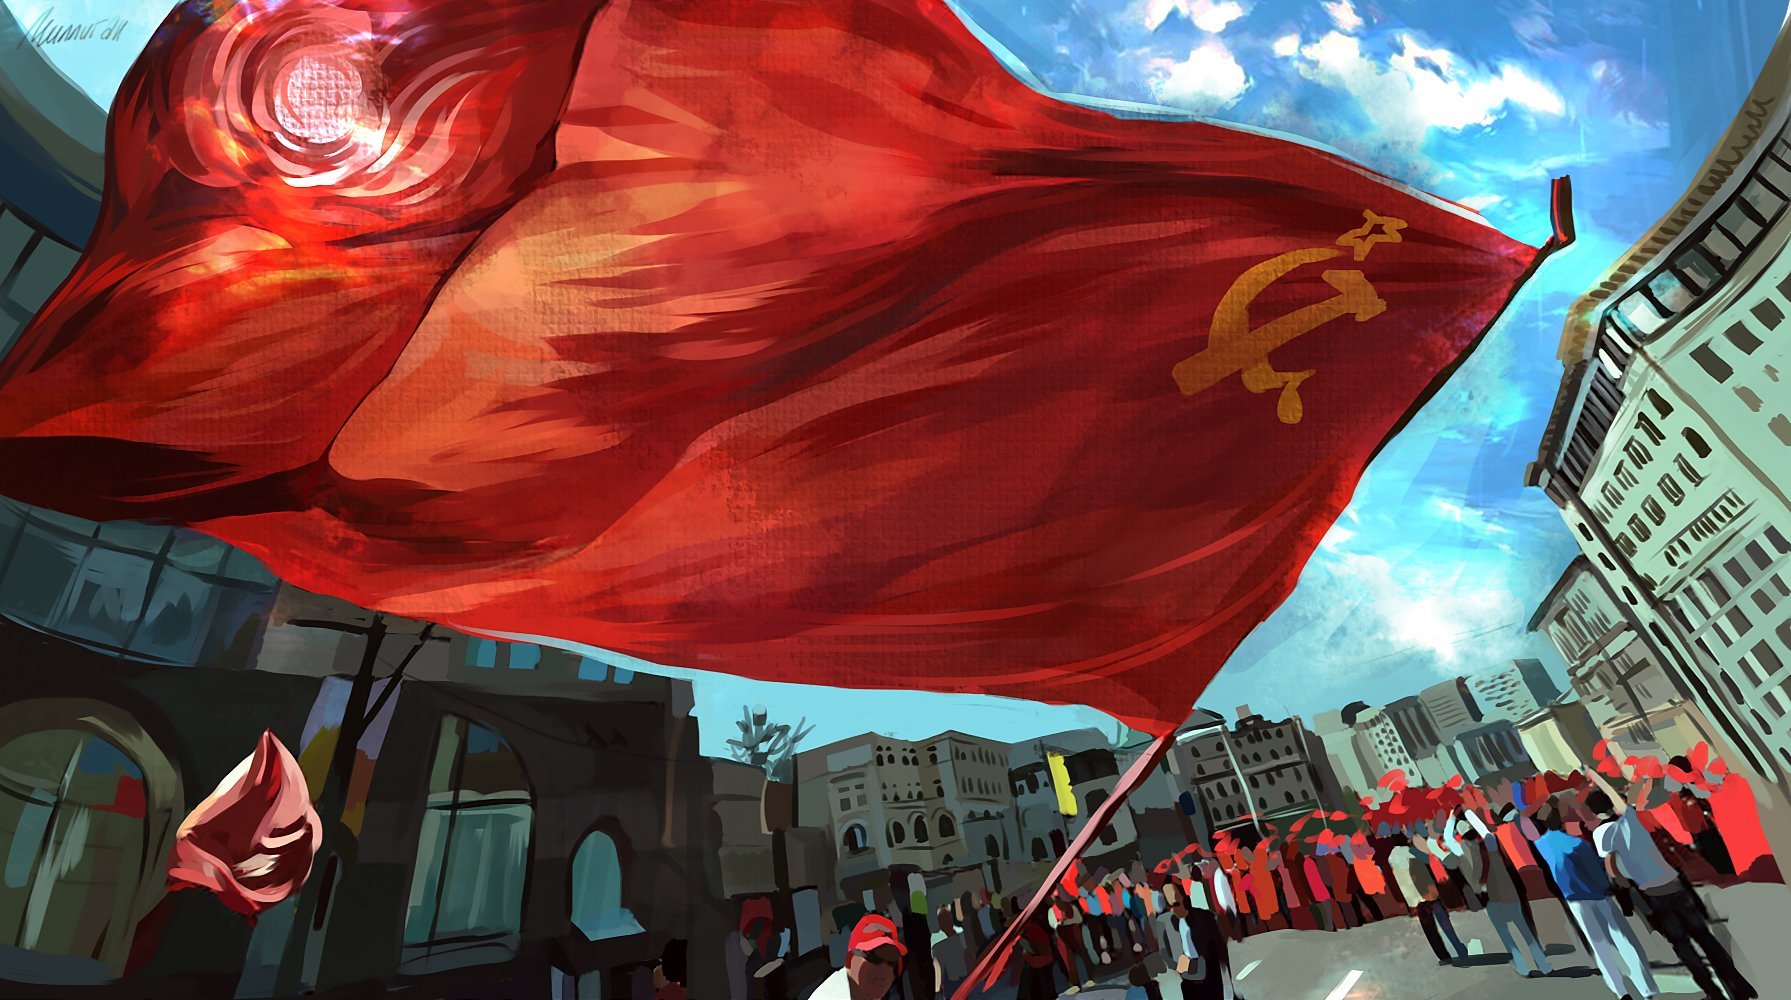 Город коммунизма